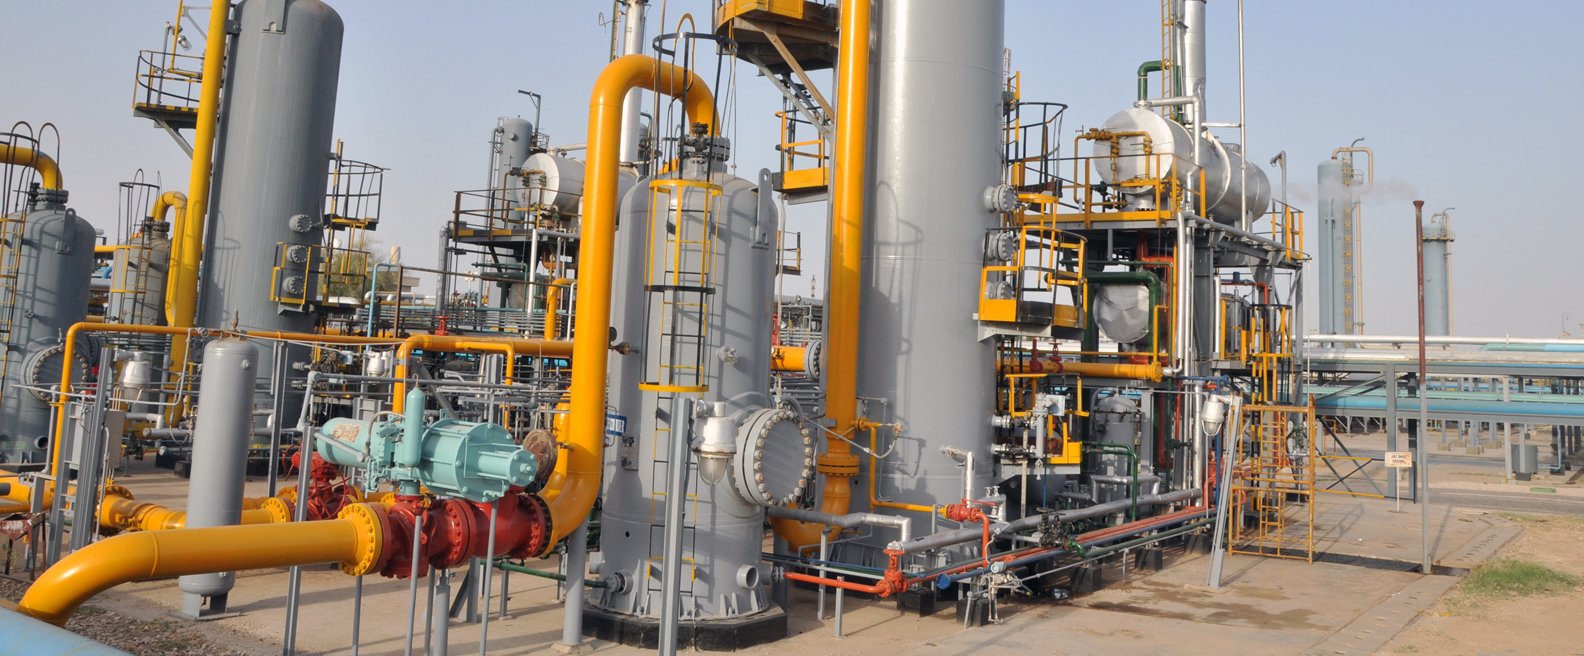 Purification Plant Sui Gas Field